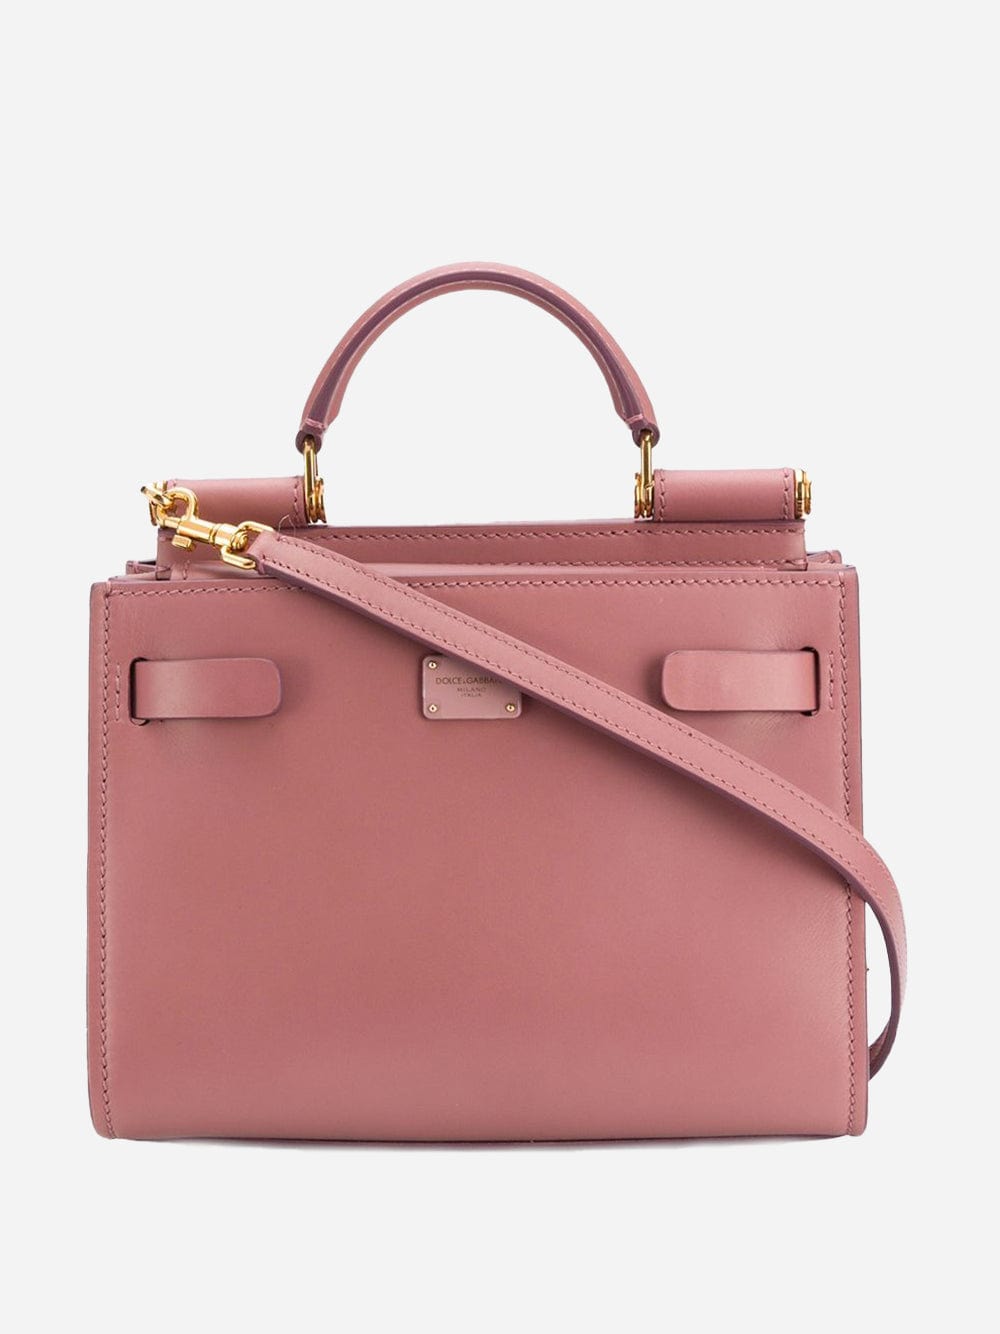 Dolce & Gabbana Small New Sicily Shoulder Bag